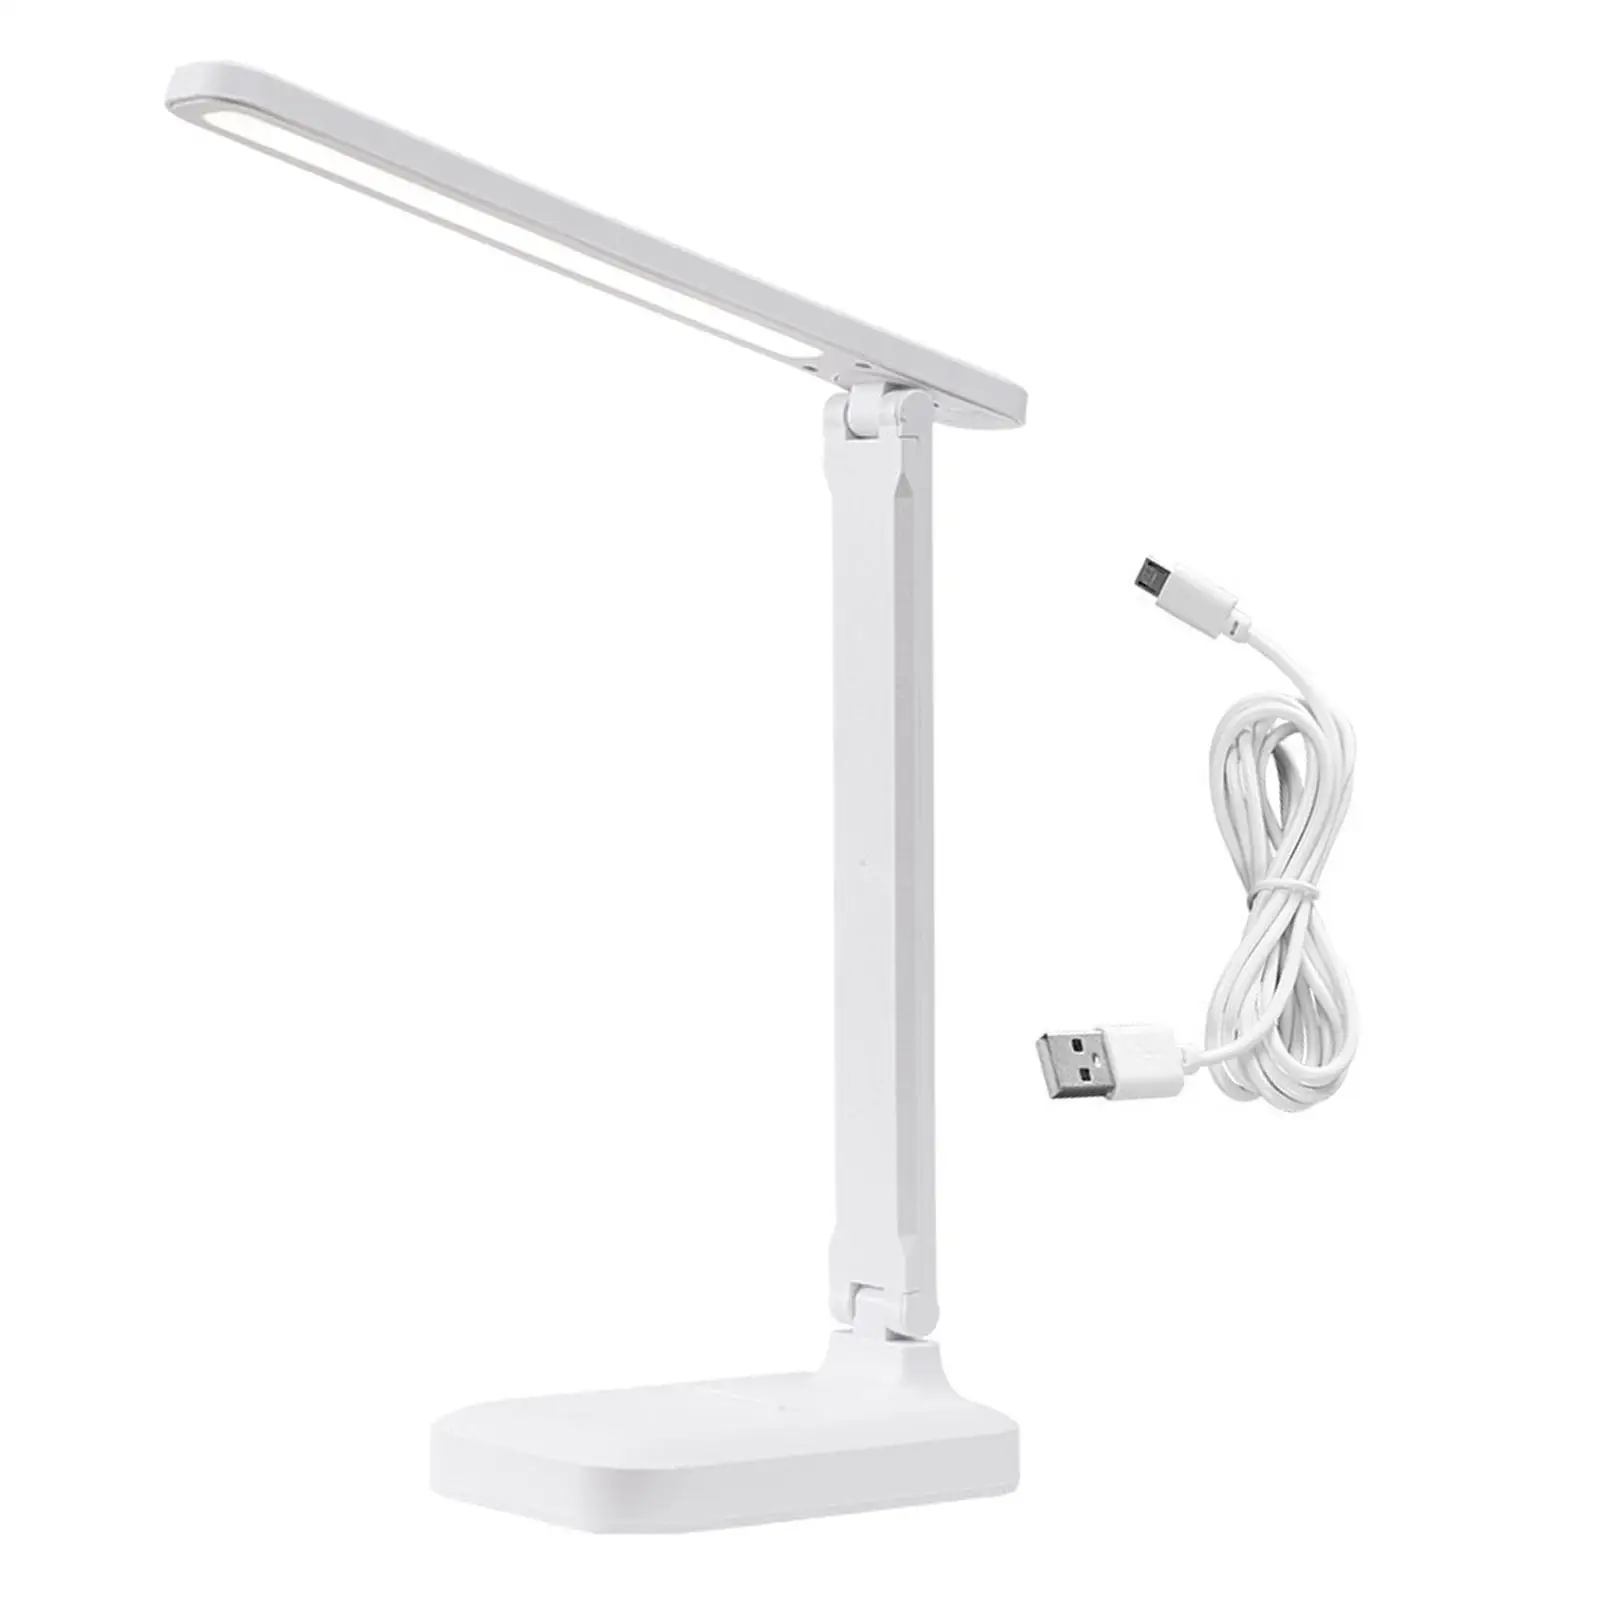 LED Desk Lamp Foldable Adjustable Lights White Night Light Desktop Light Table Lamp for Bedroom Gift Dorm Study Room Home